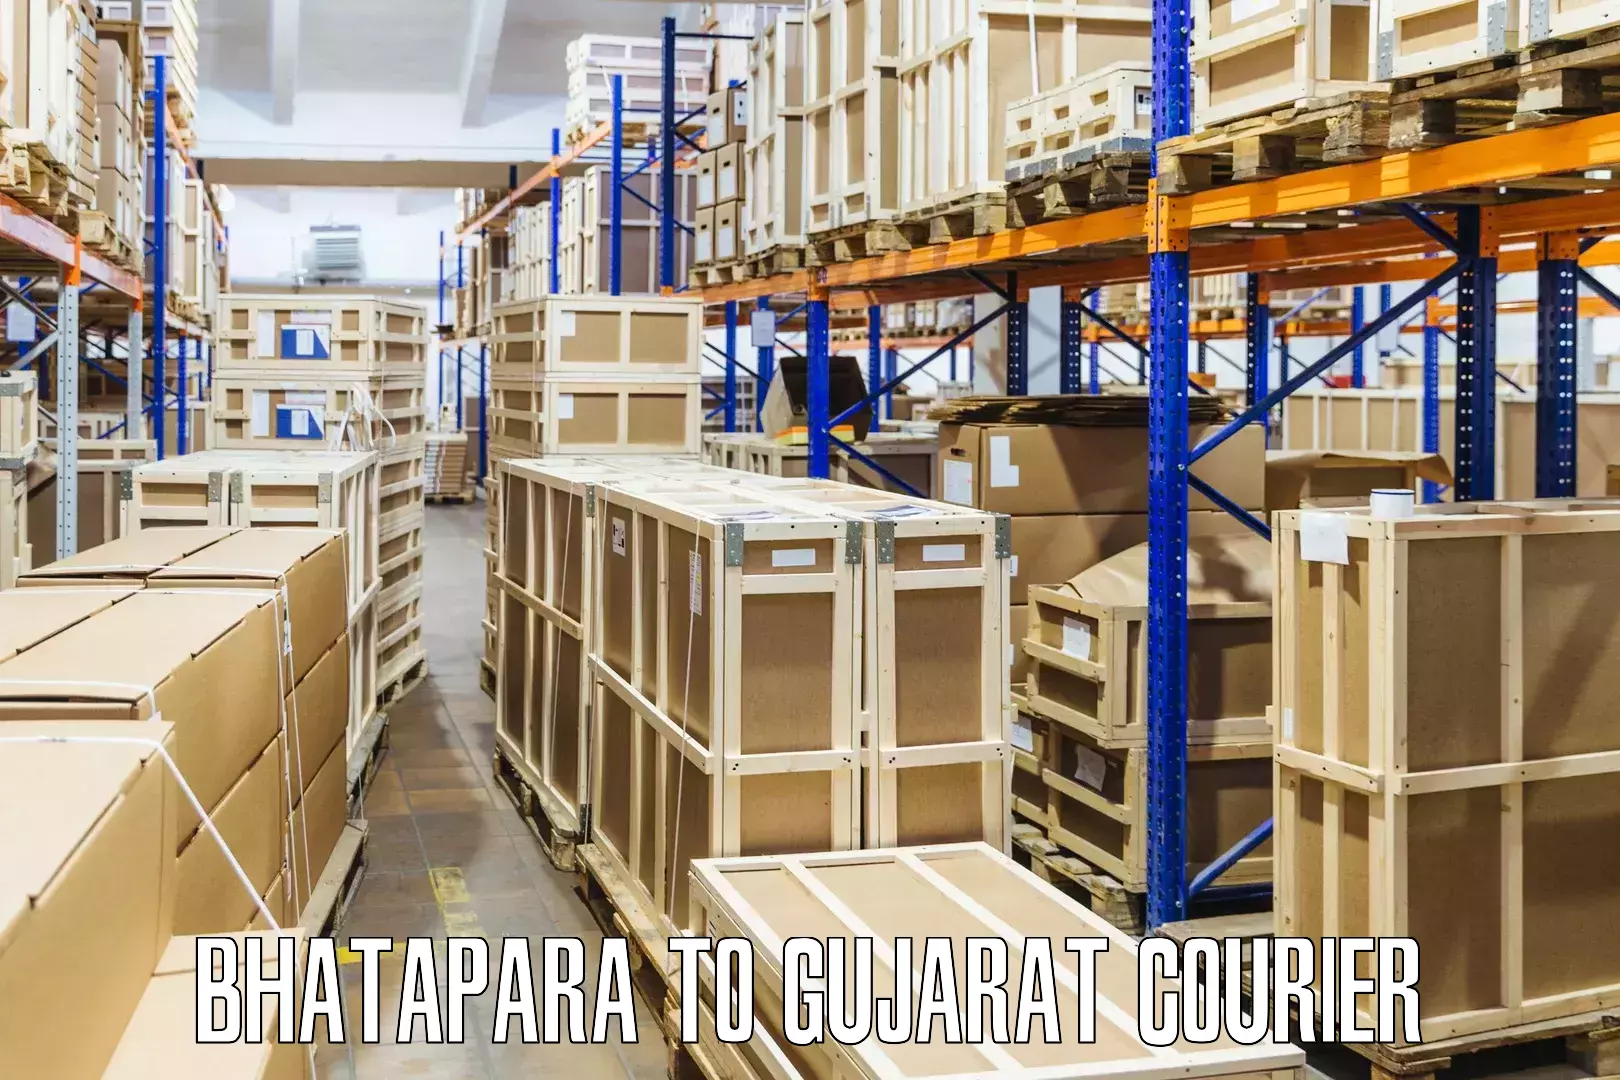 Courier service efficiency Bhatapara to Vansda